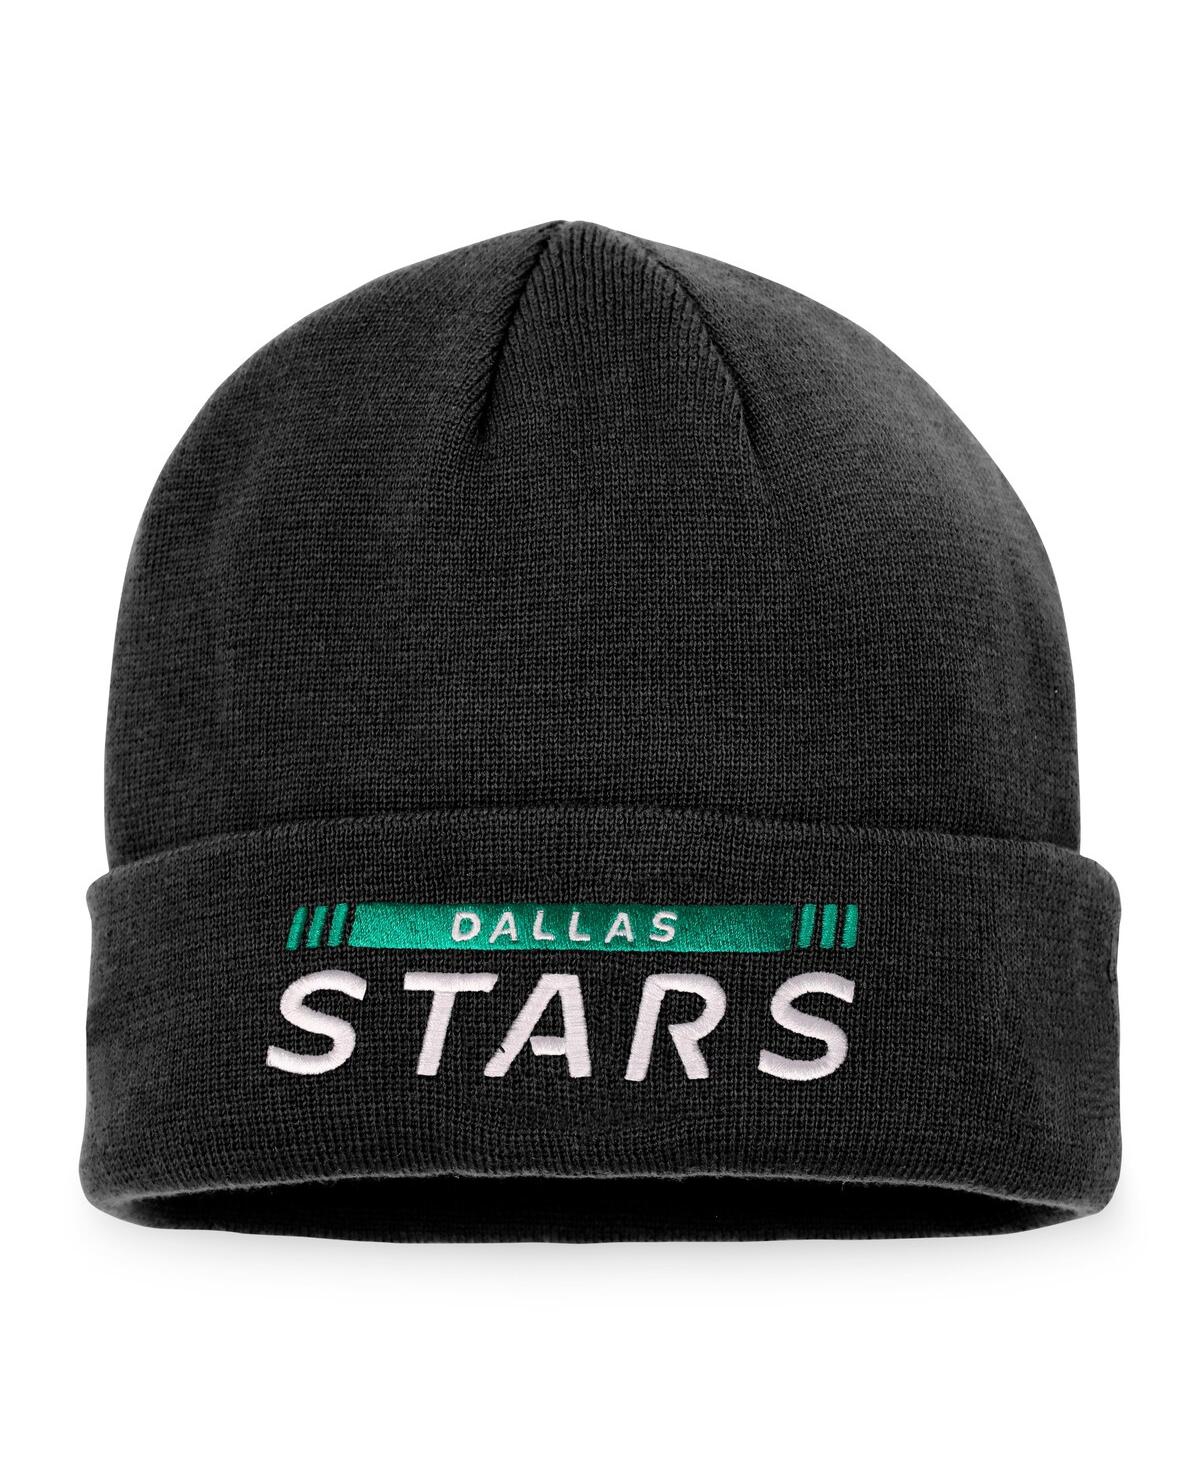 Shop Fanatics Men's  Black Dallas Stars Authentic Pro Rink Cuffed Knit Hat